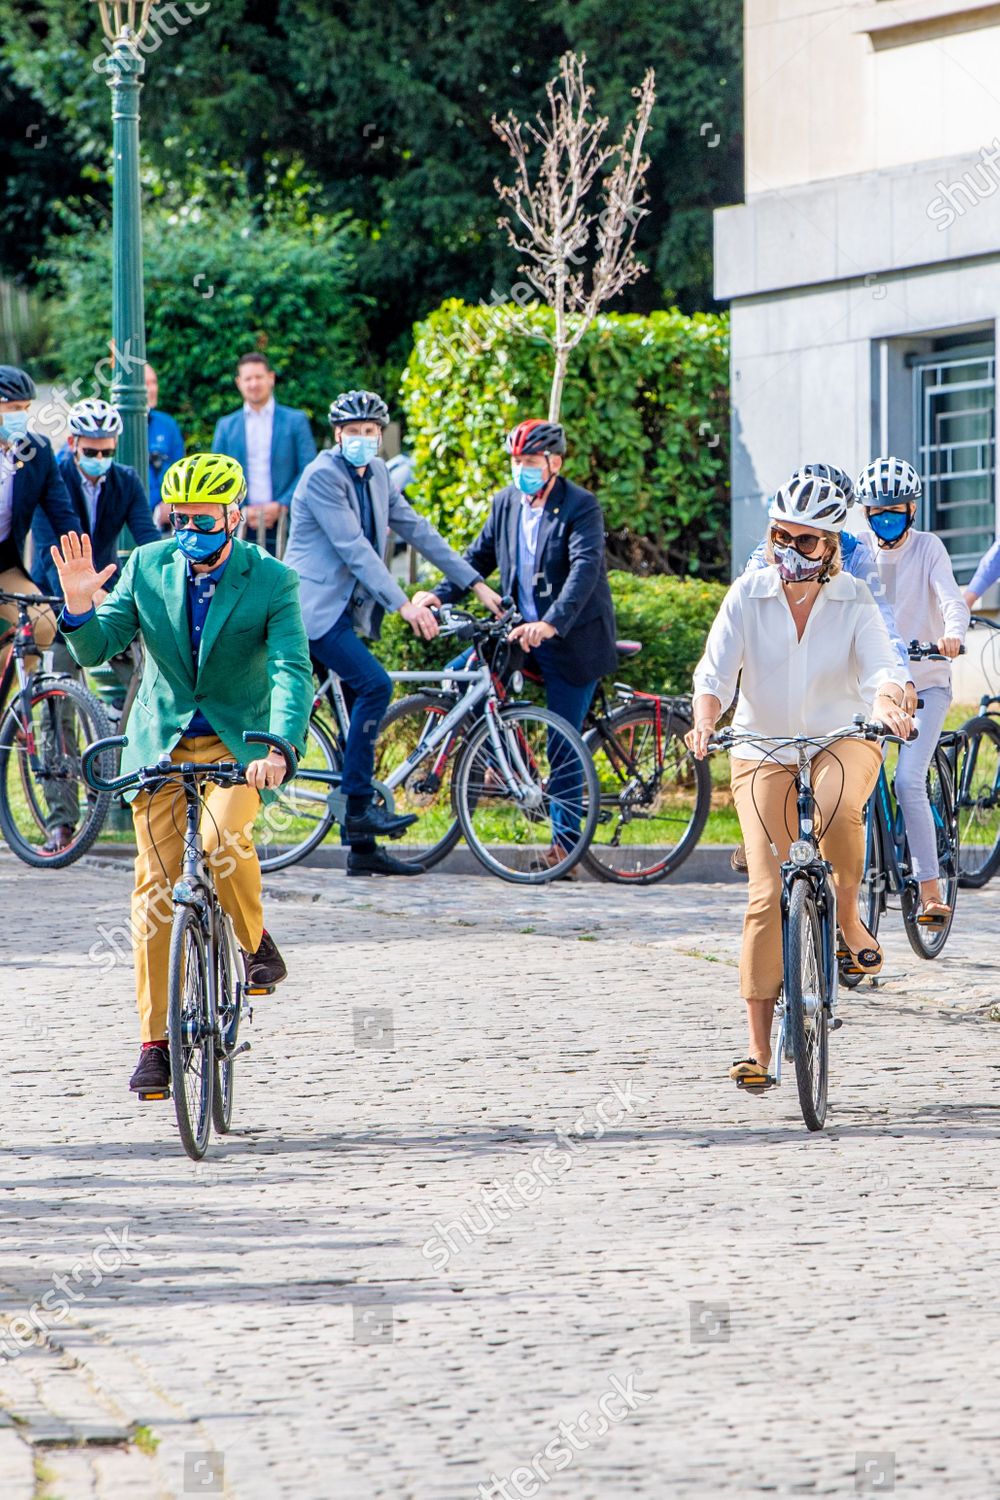 belgian-royals-cycle-on-car-free-sunday-brussels-belgium-shutterstock-editorial-10783150ae.jpg